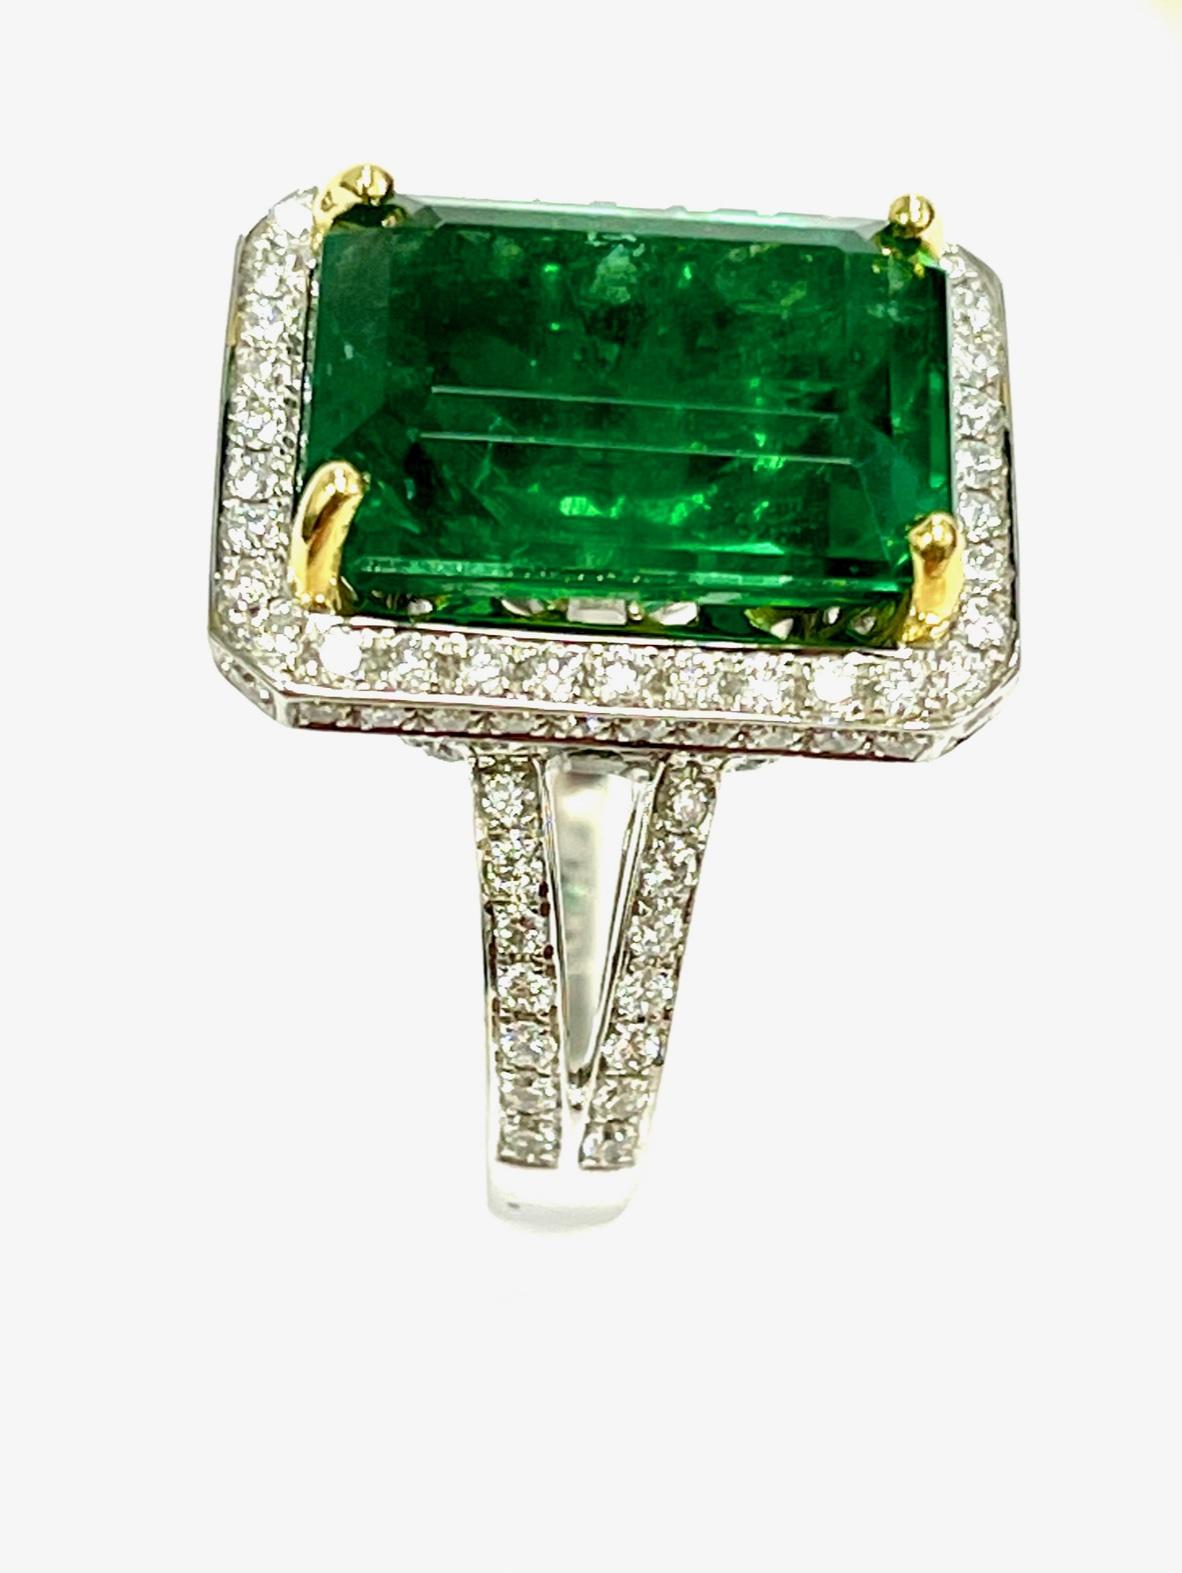 Emerald Cut 12.12 Carat  Emerald Diamond Ring For Sale